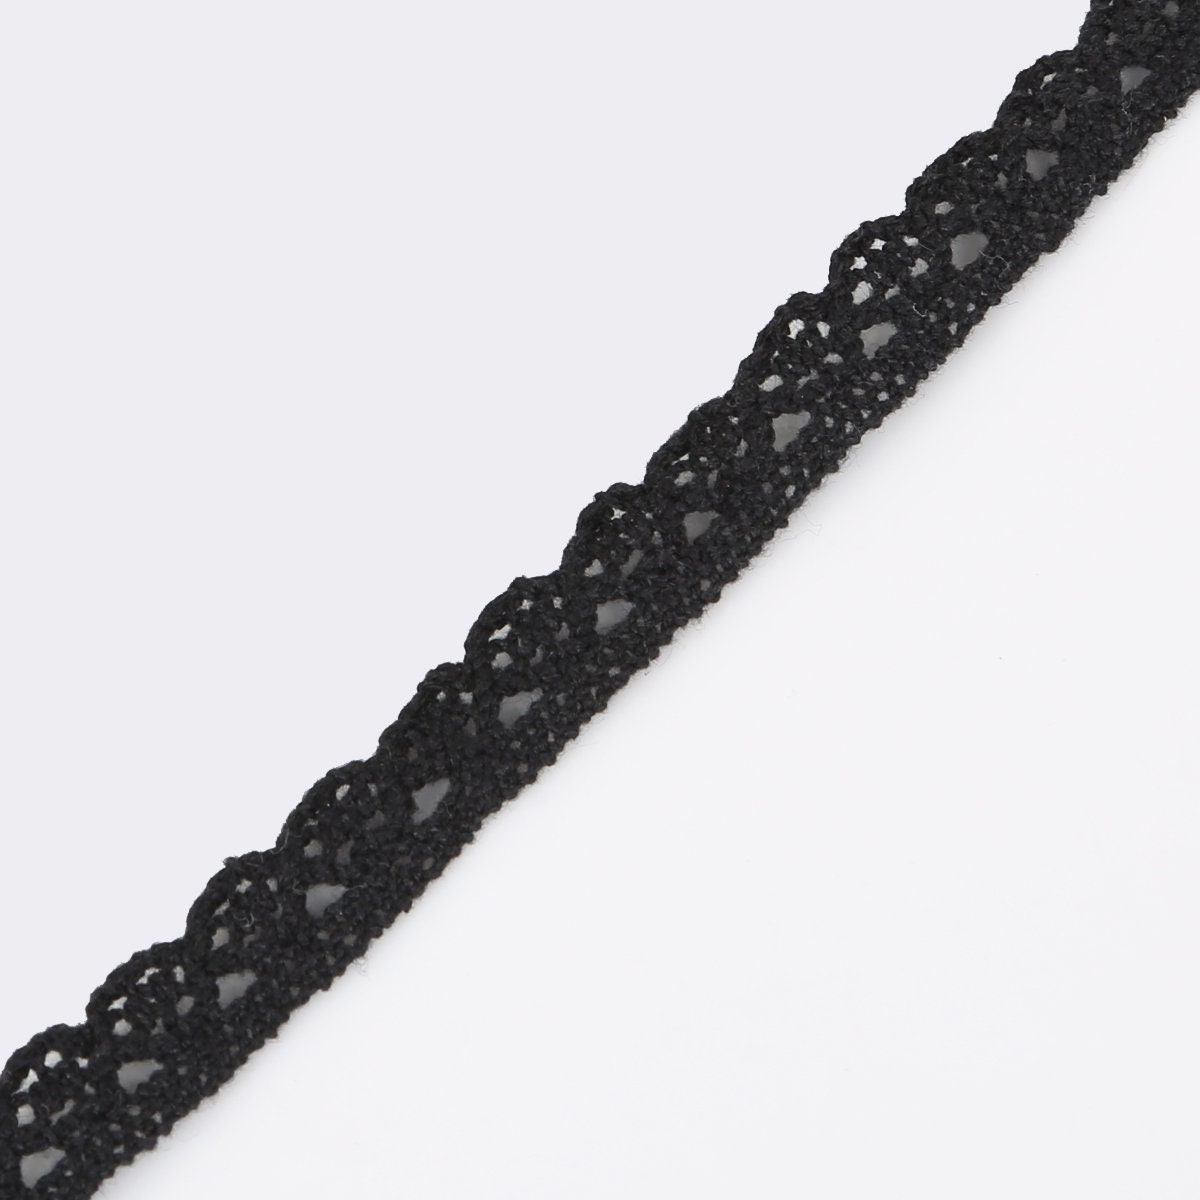 4 PATTERNS Black Lace Ribbon Roll 5 Yards Ornamental Lace Roll